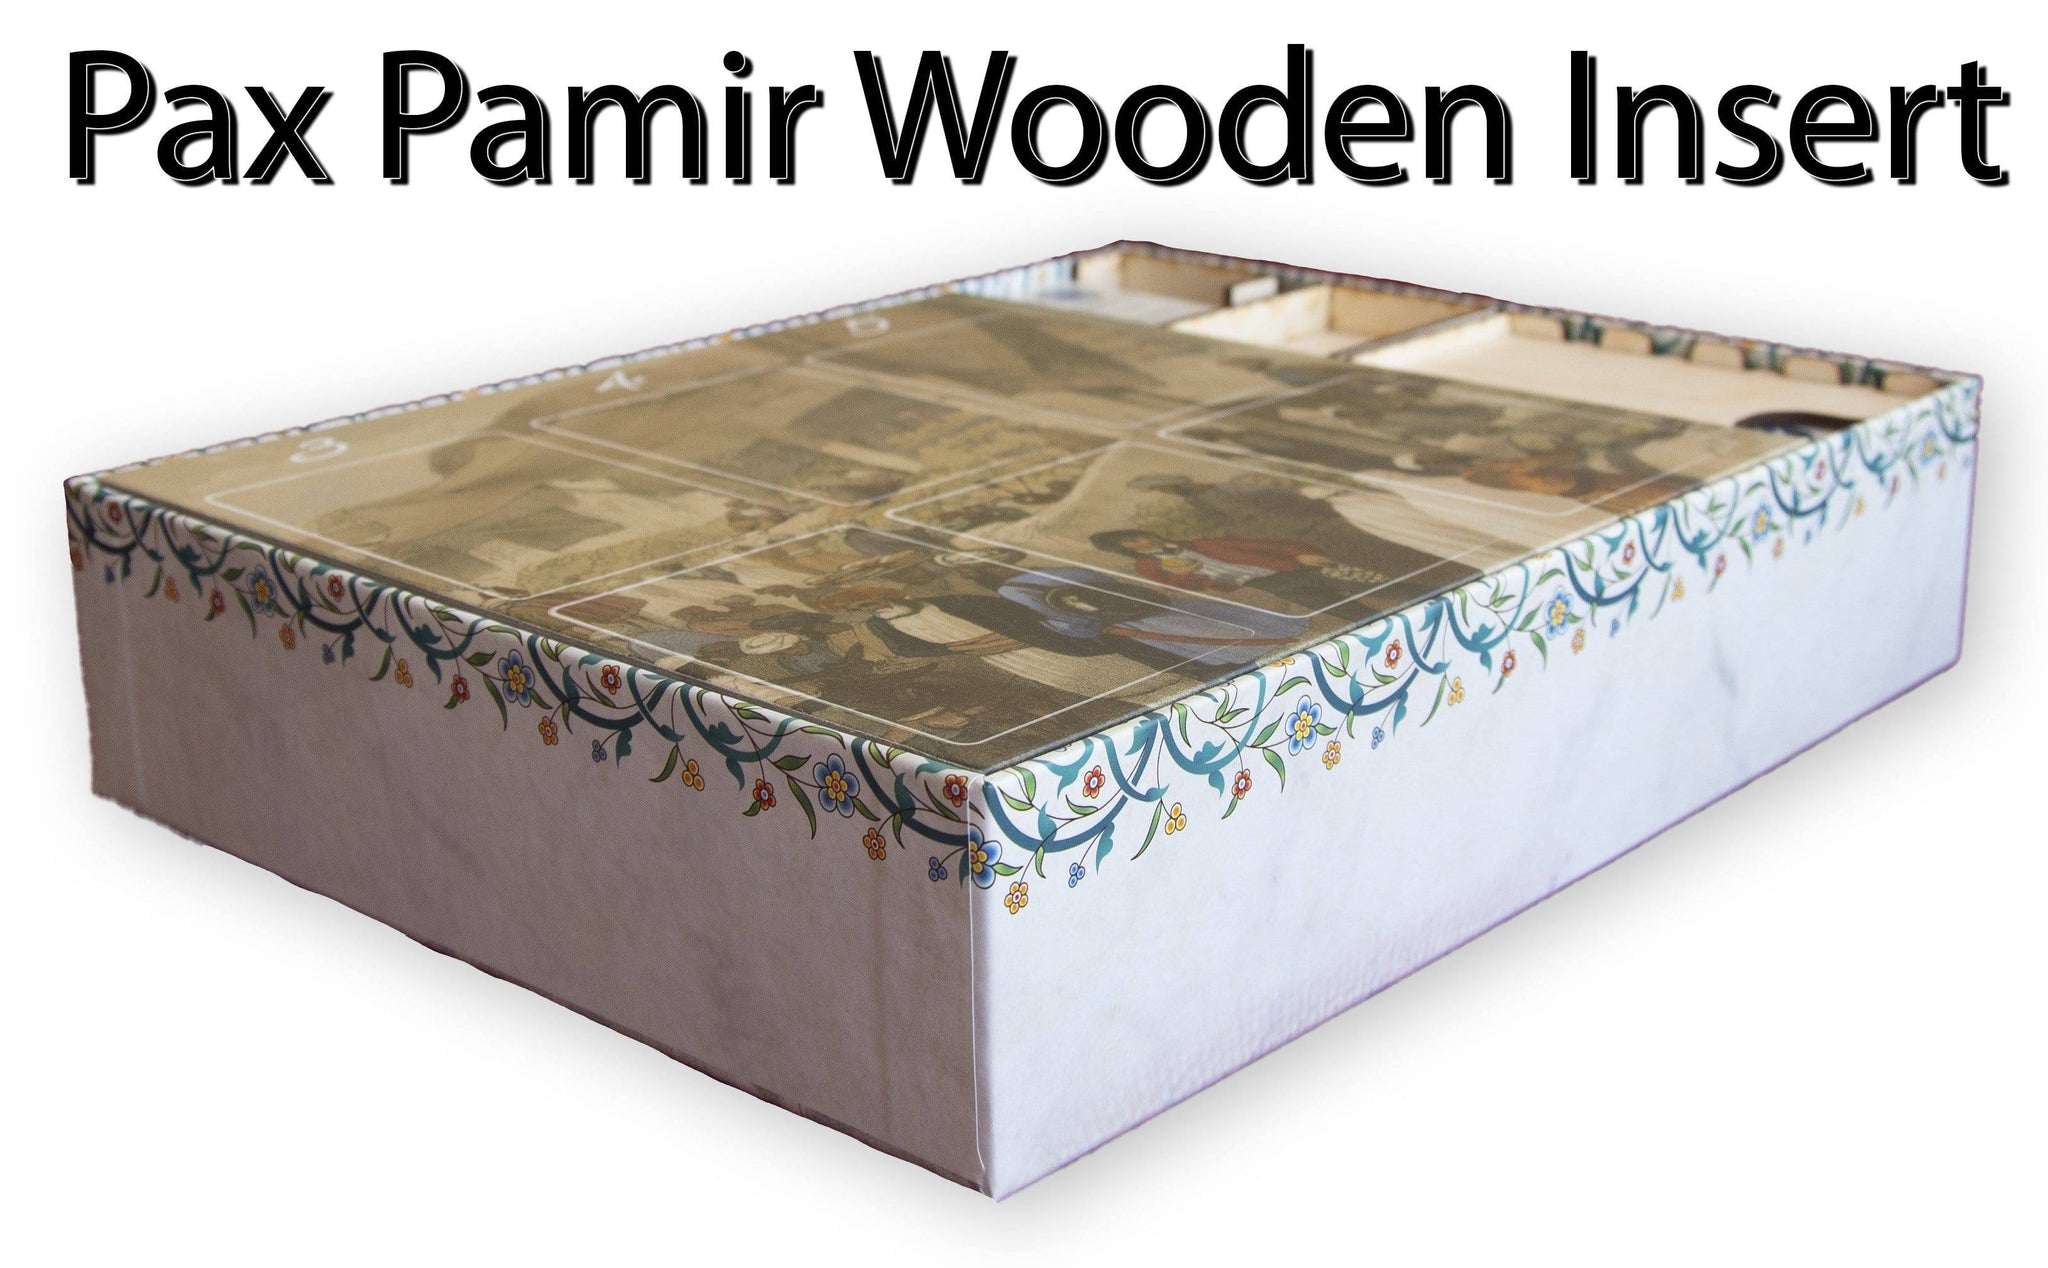 Pax Pamir 2nd Edition Wooden Insert/Organizer - The Nifty Organizer